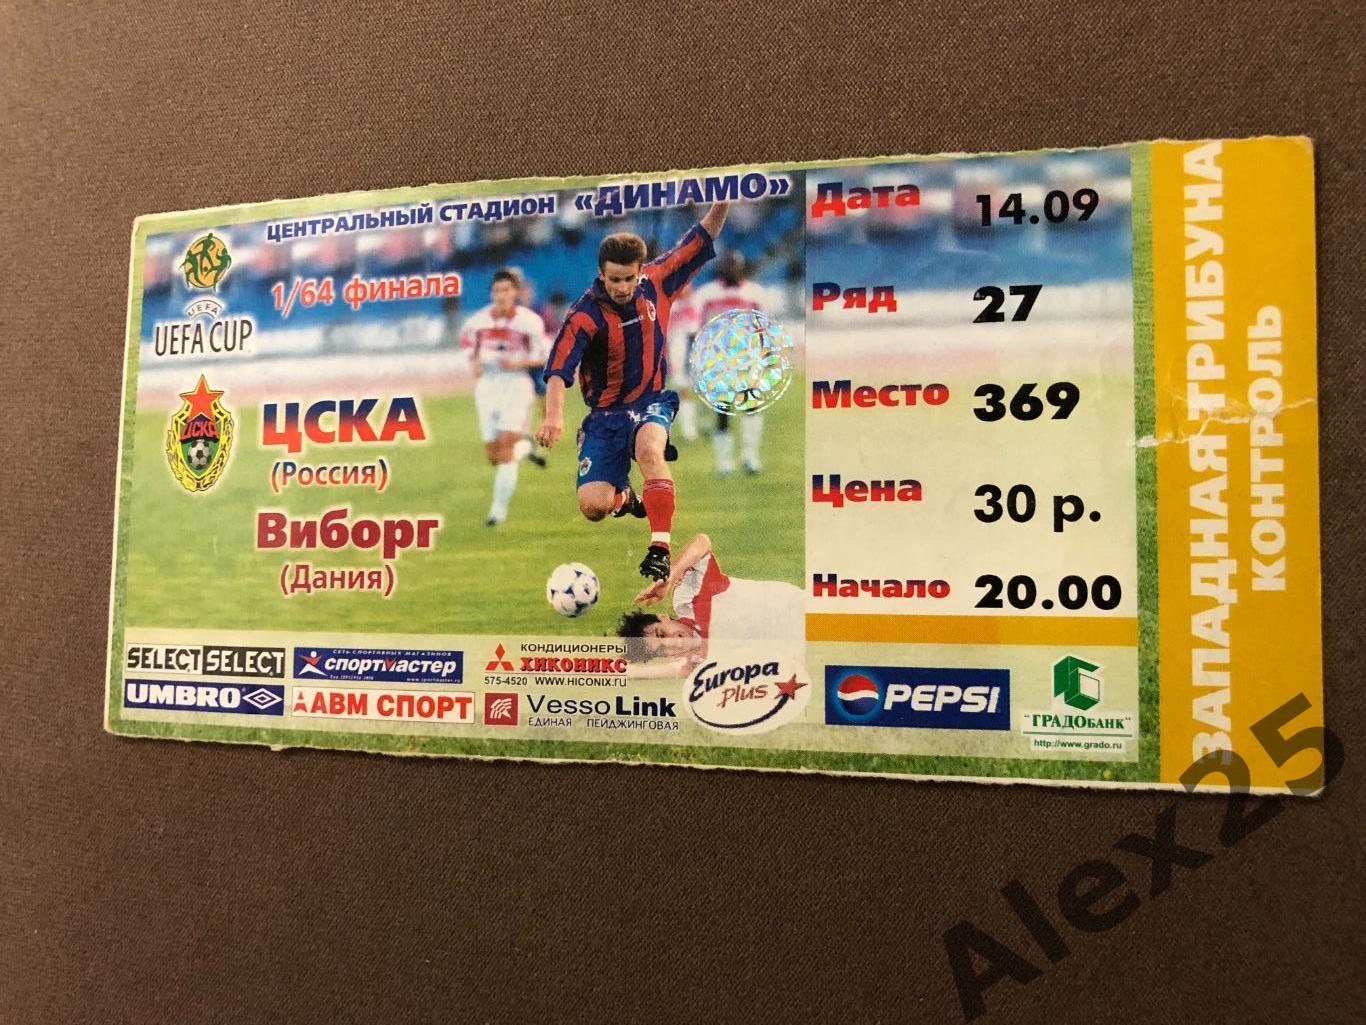 Билет футбол ЦСКА - Виборг (Дания)2000 09.14 Кубок УЕФА